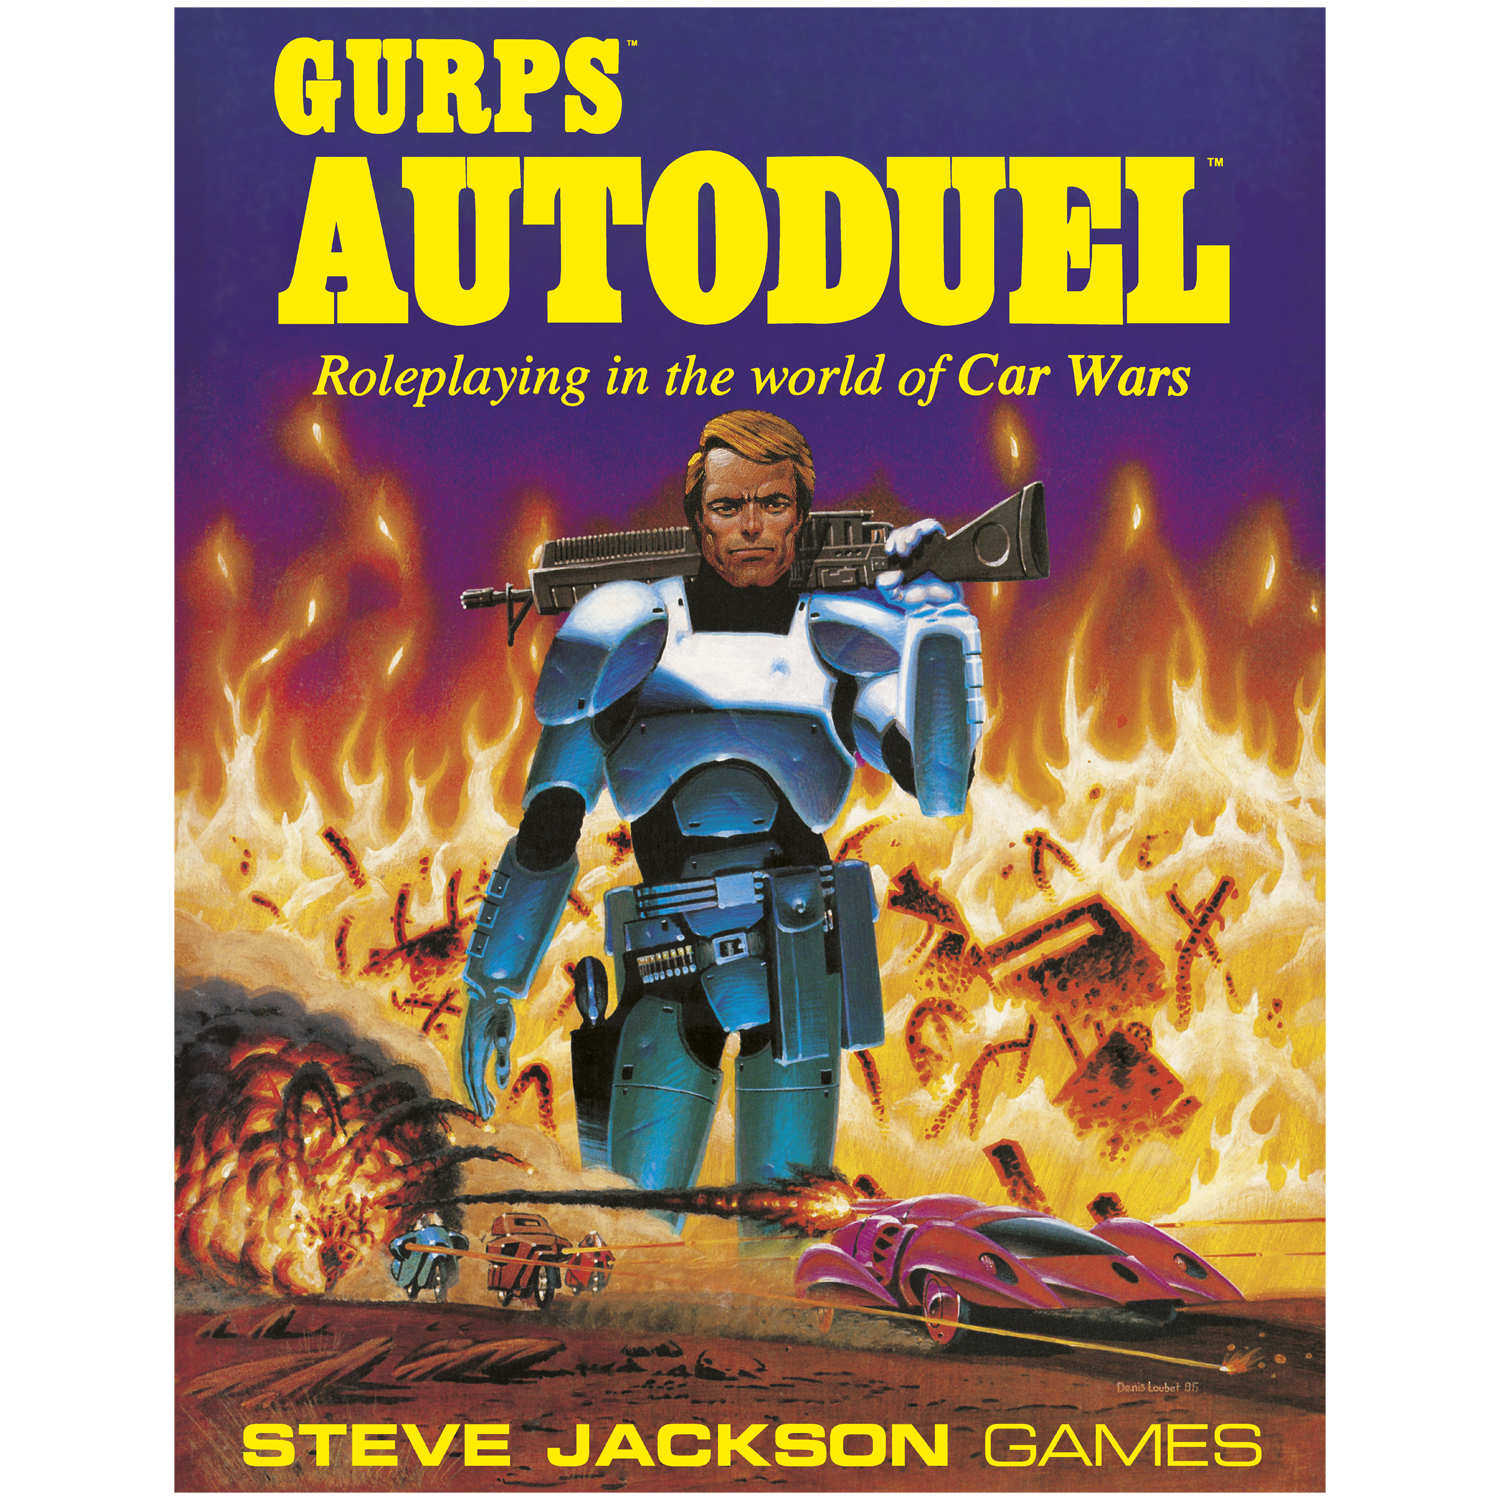 GURPS Autoduel